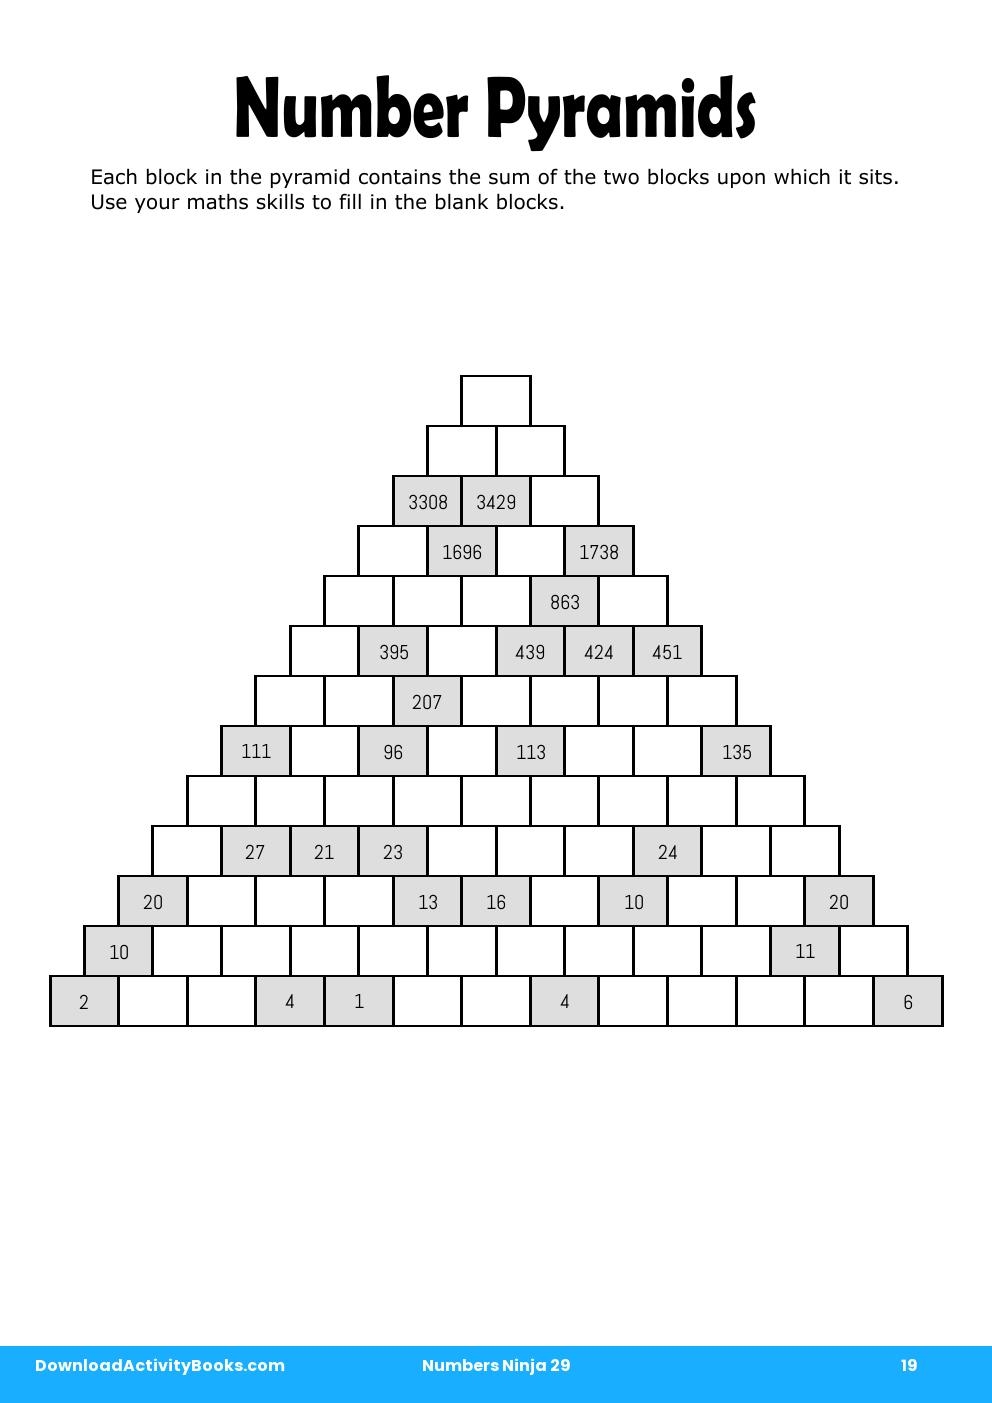 Number Pyramids in Numbers Ninja 29